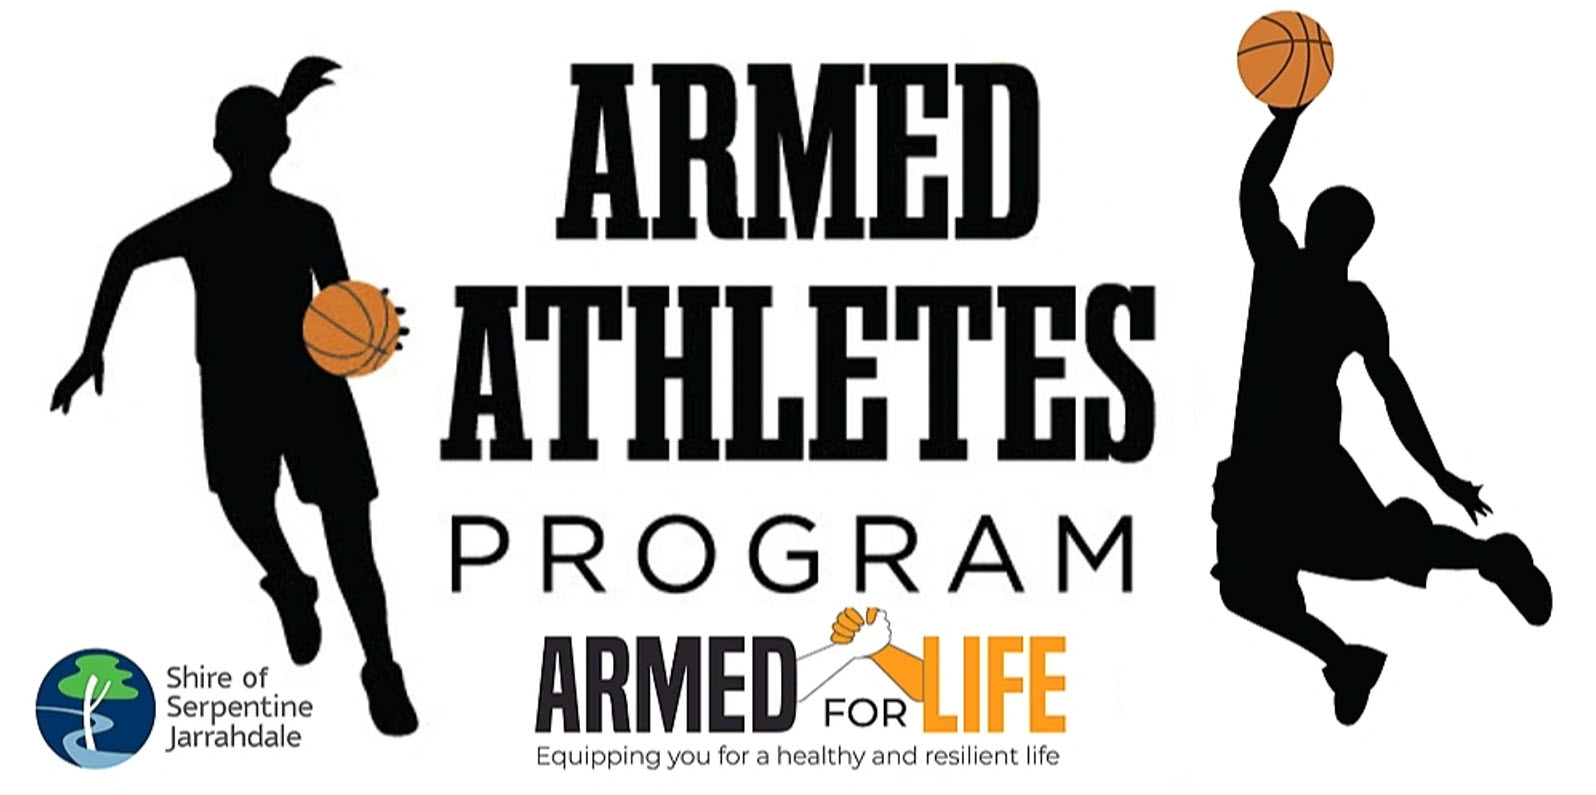 Armed Athletes - Basketball Program